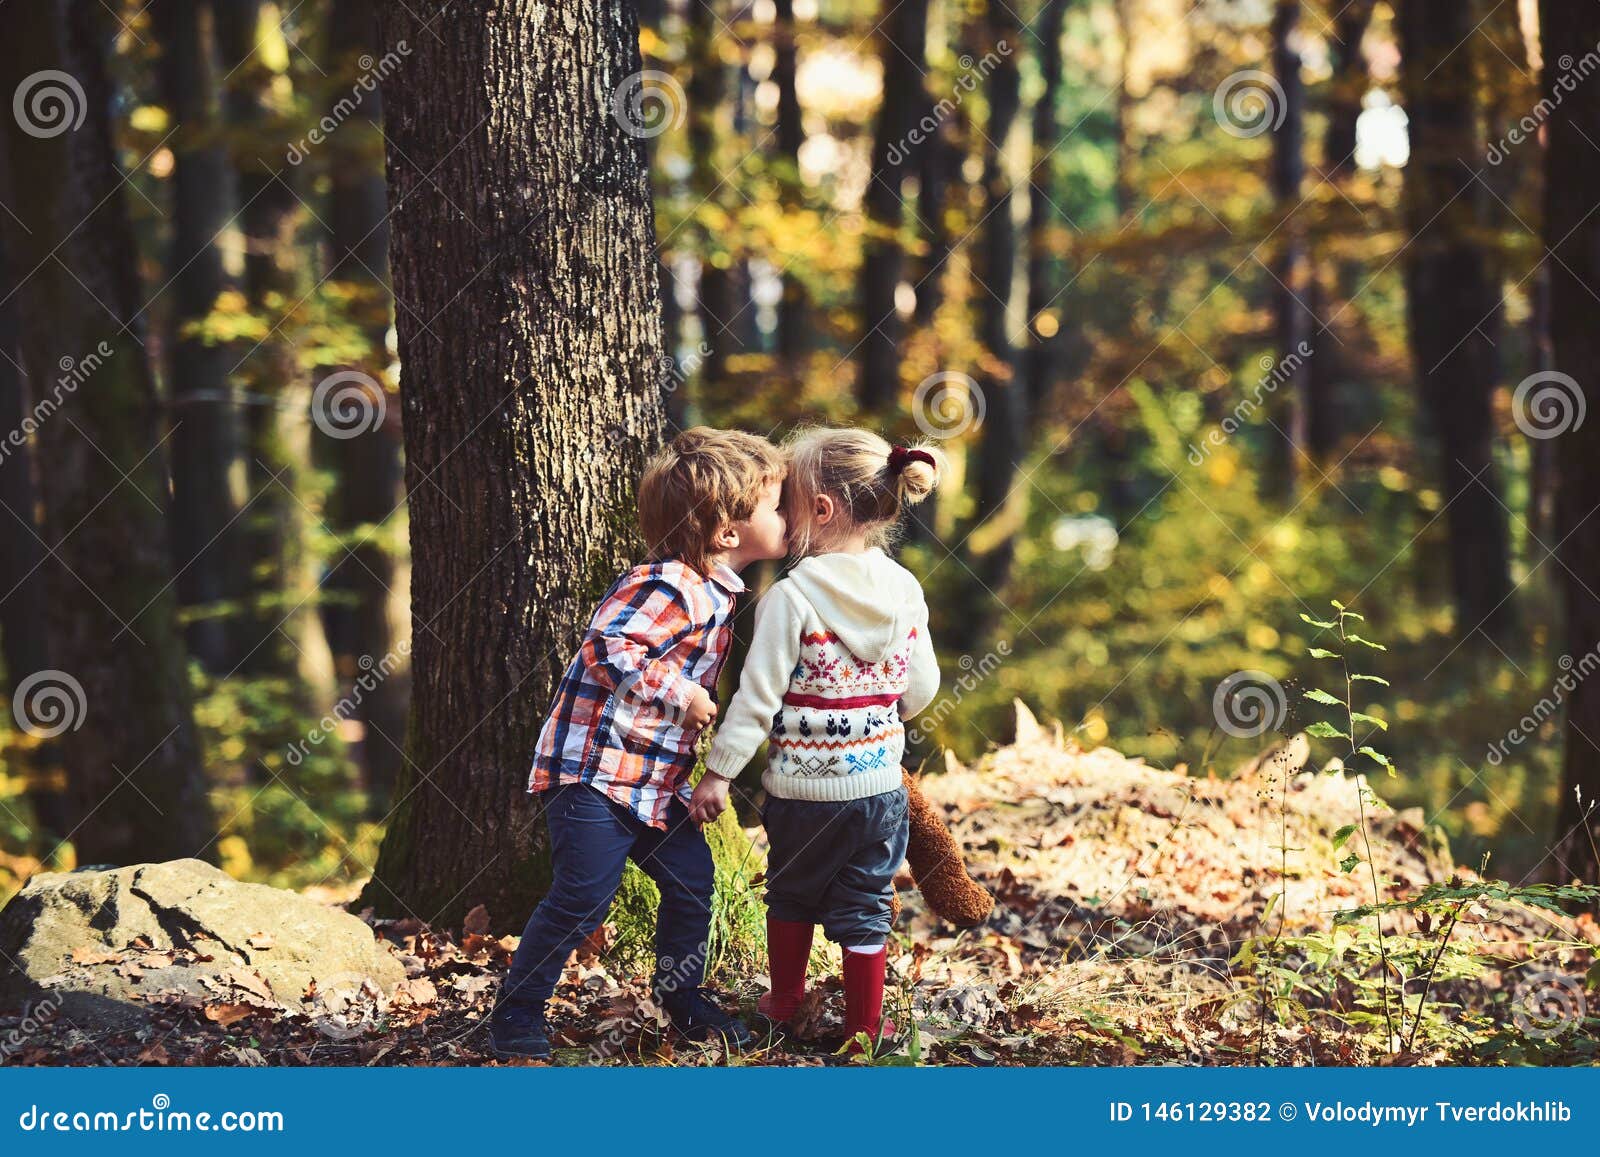 Boys kiss girls. Мальчик целует девочку. Мальчик с девочкой целуются в лесу. Мальчики целуются в лесу. Мальчик целует мальчика.